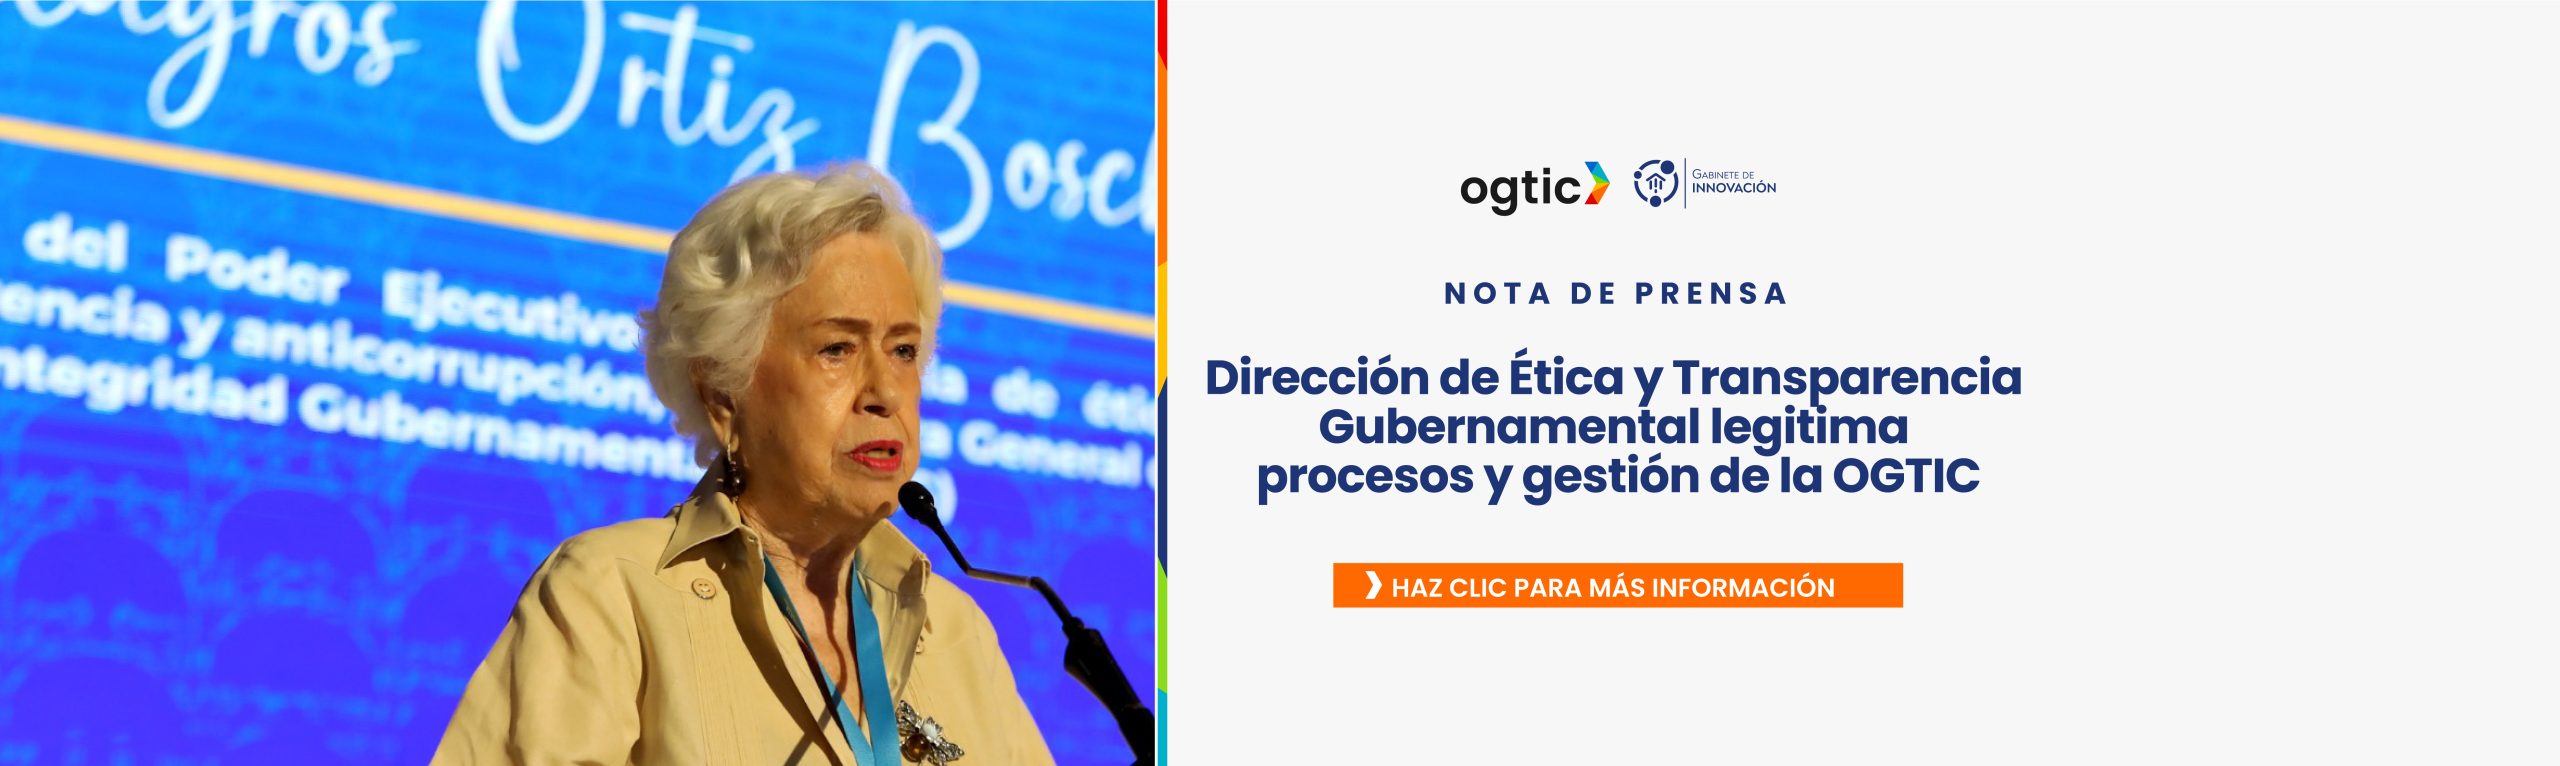 NP-direccion de etica legisitimiza procesos de ogtic